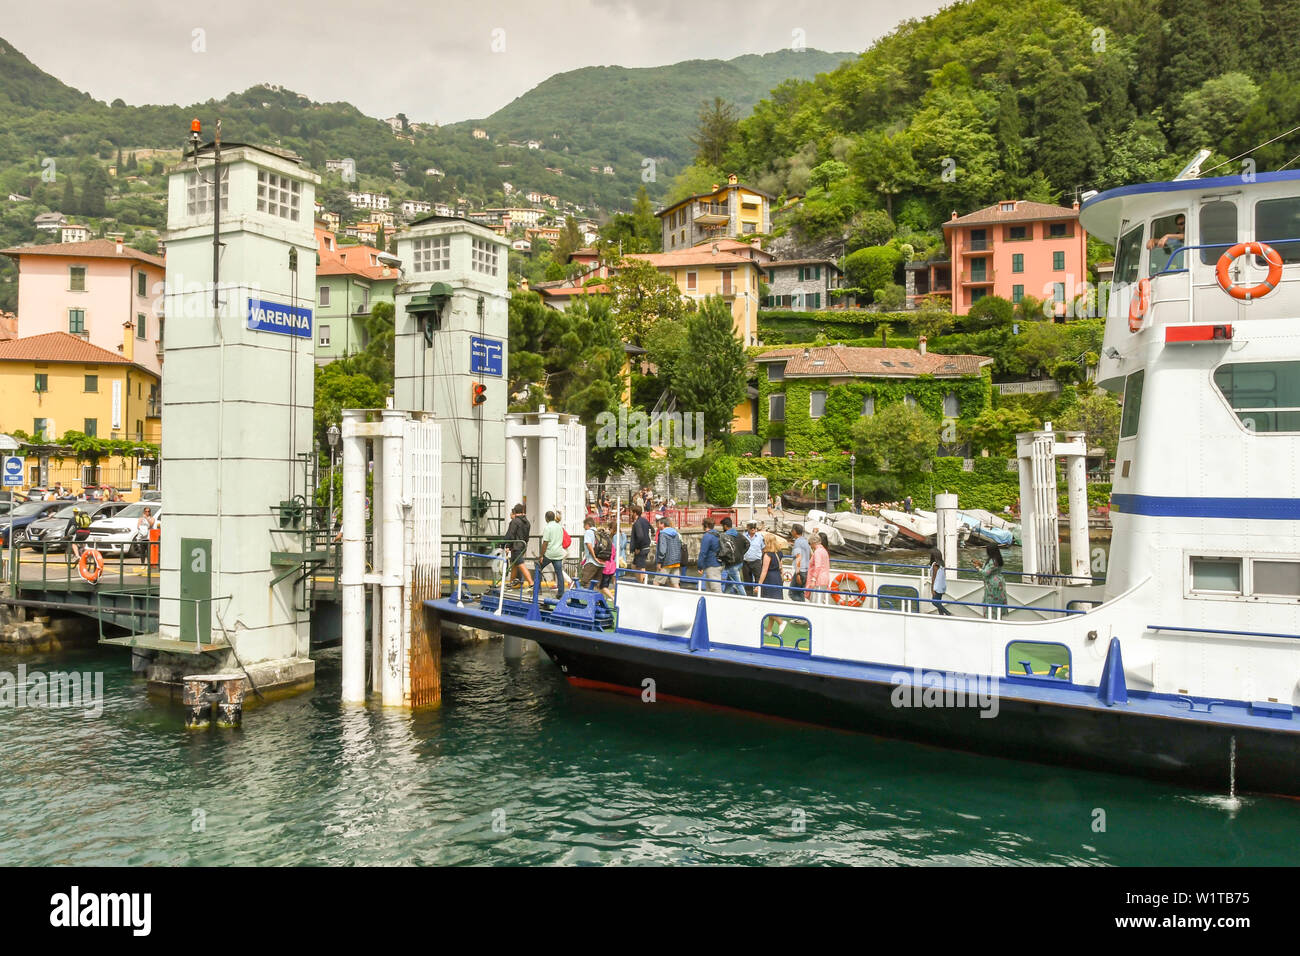 VARENNA, LAKE COMO, ITALY - JUNE 2019: Passengers disembarking a car ferry at the jetty in Varenna on Lake Como. Stock Photo